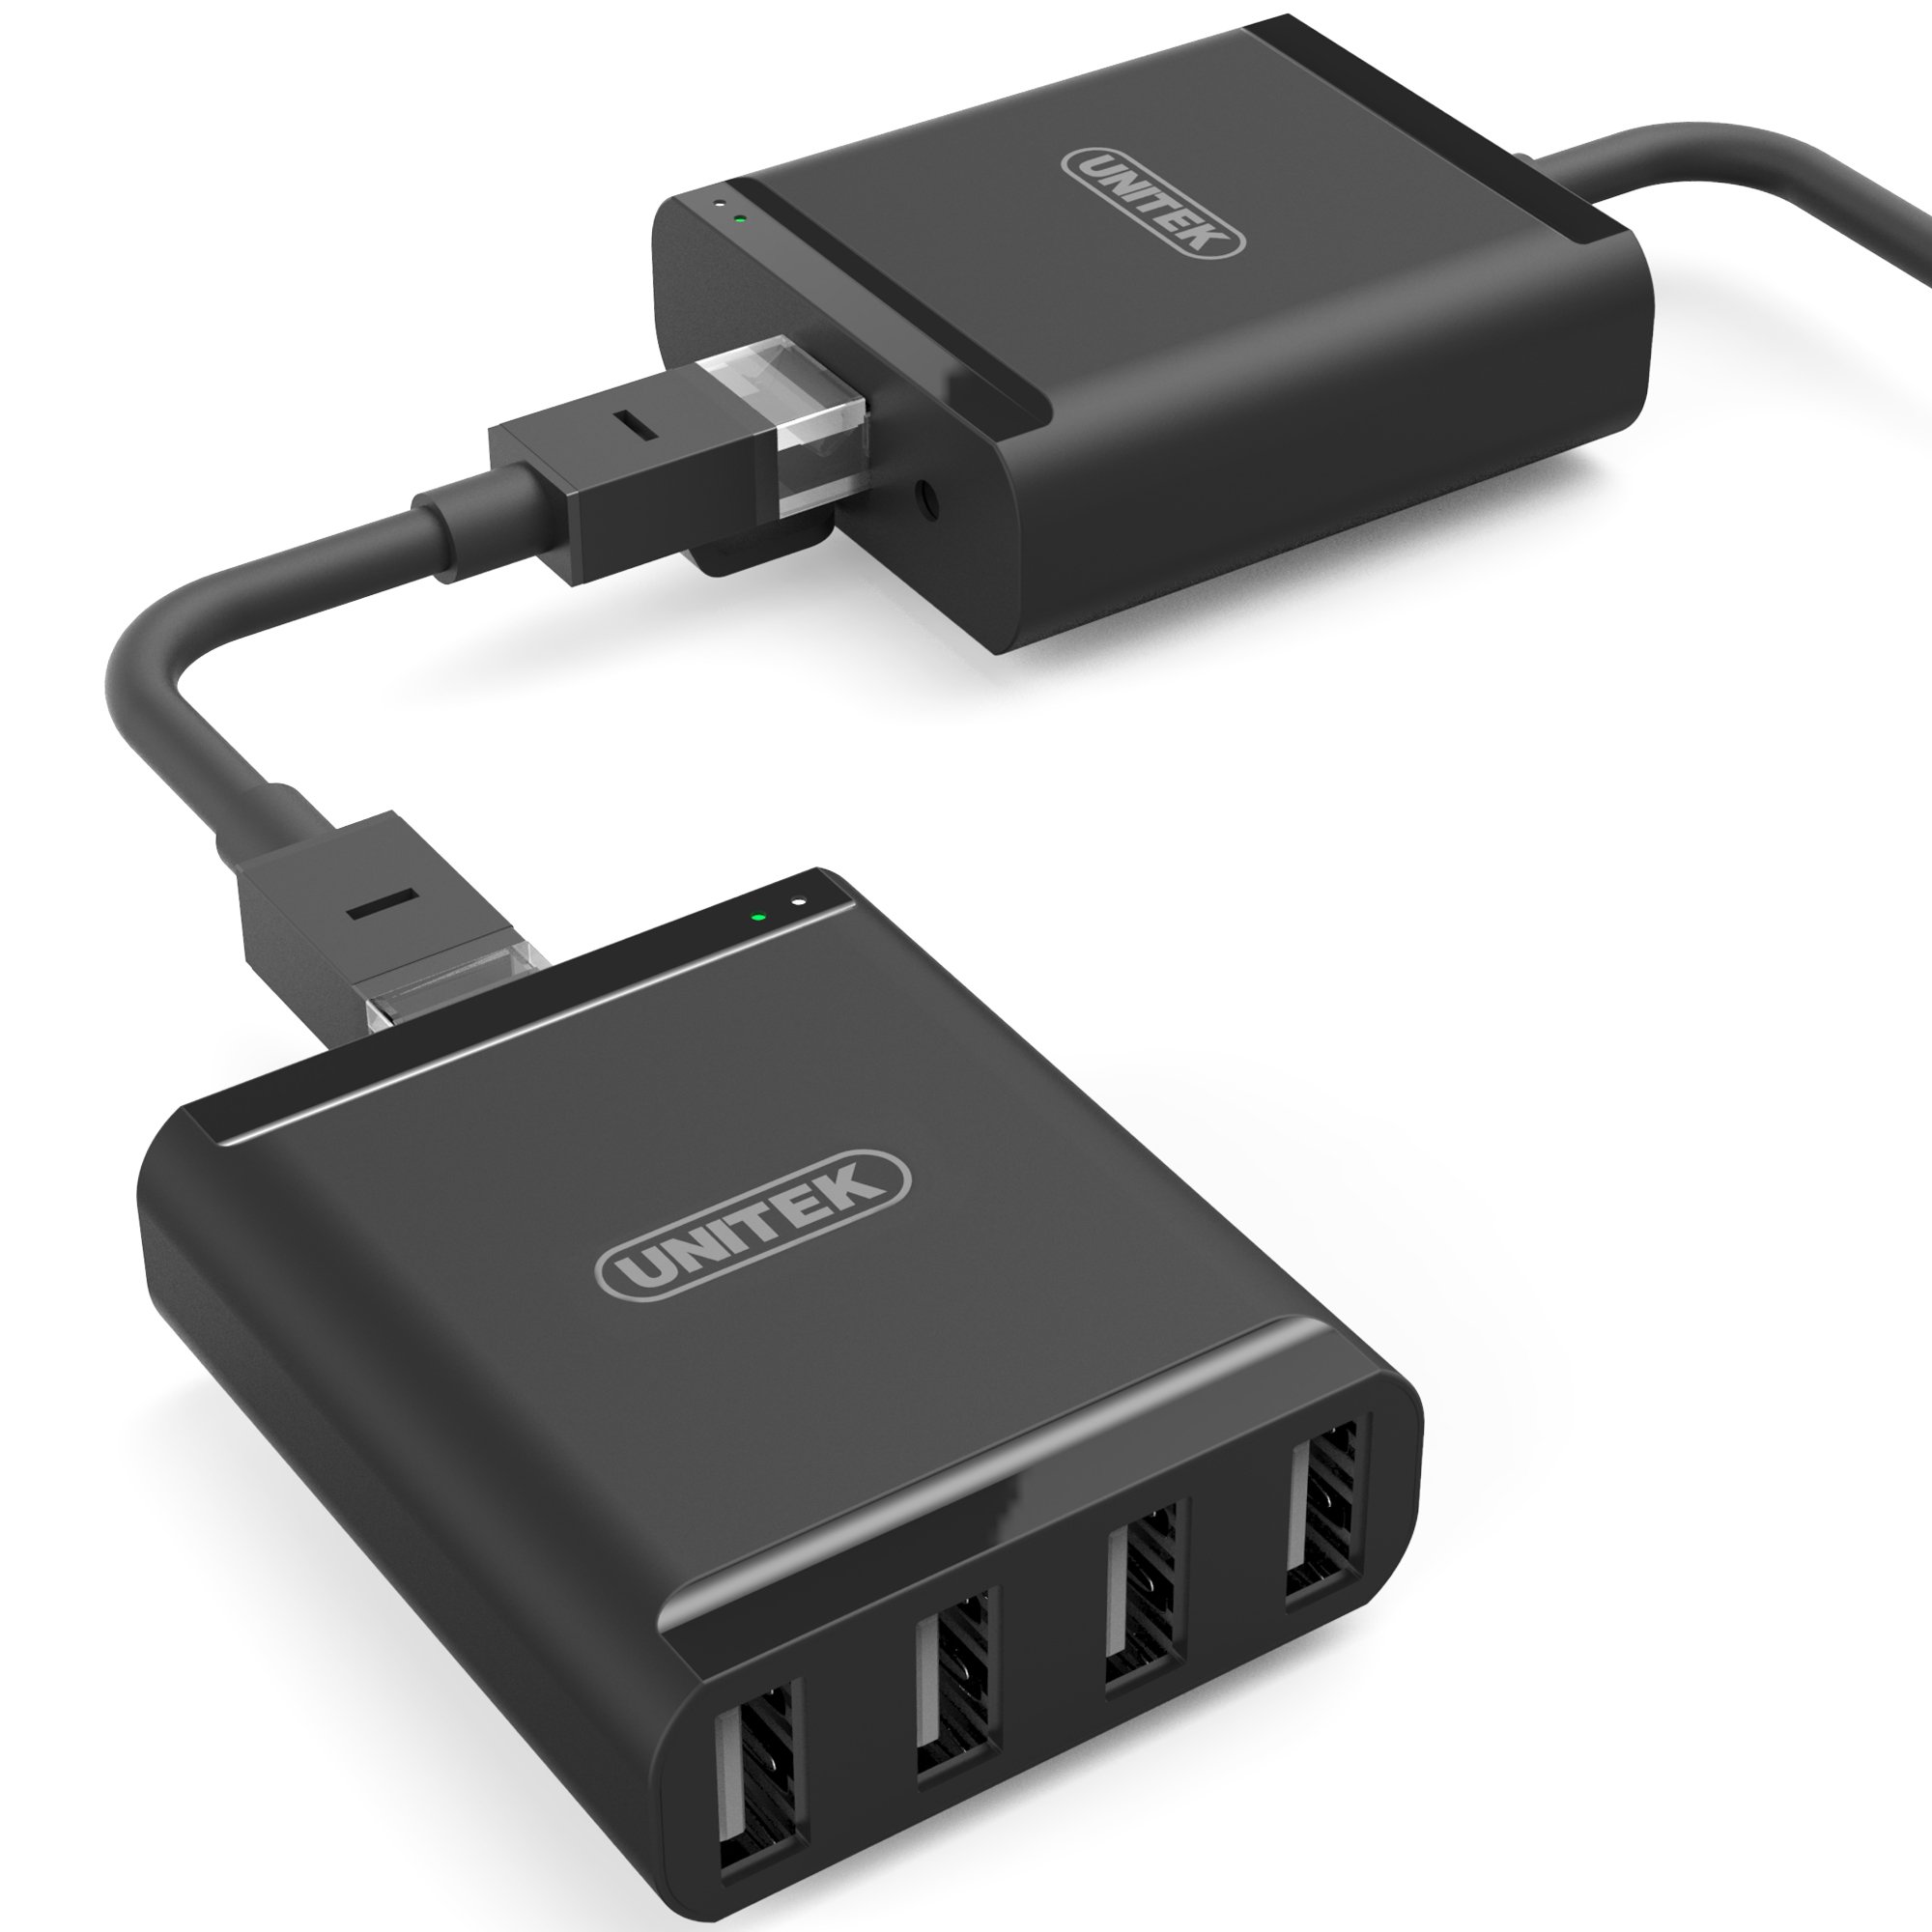 Cablu de date Unitek Y-2516, USB 2.0, 4 x USB, Negru